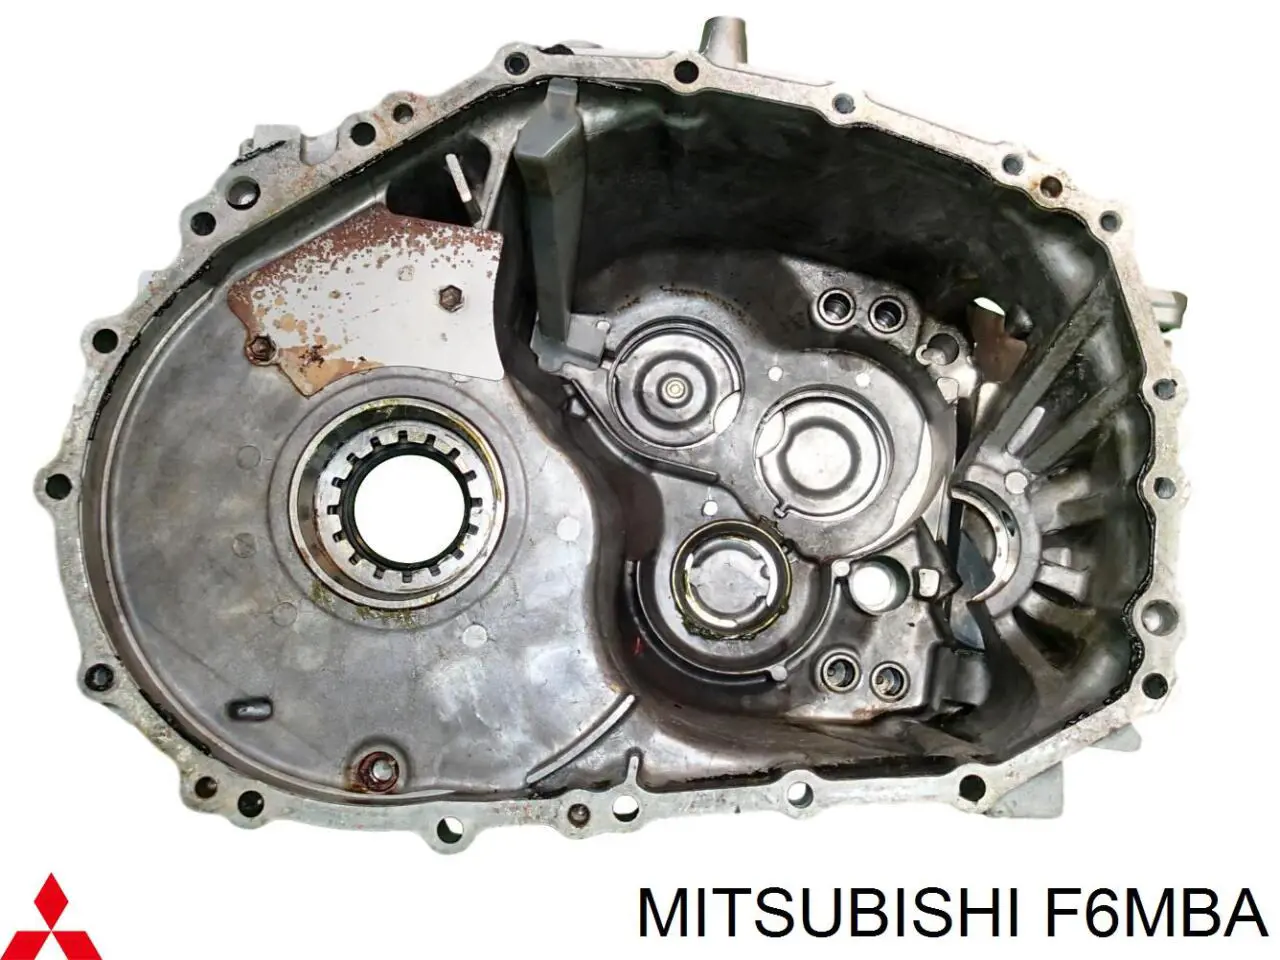 2500A294 Mitsubishi caja de cambios mecánica, completa